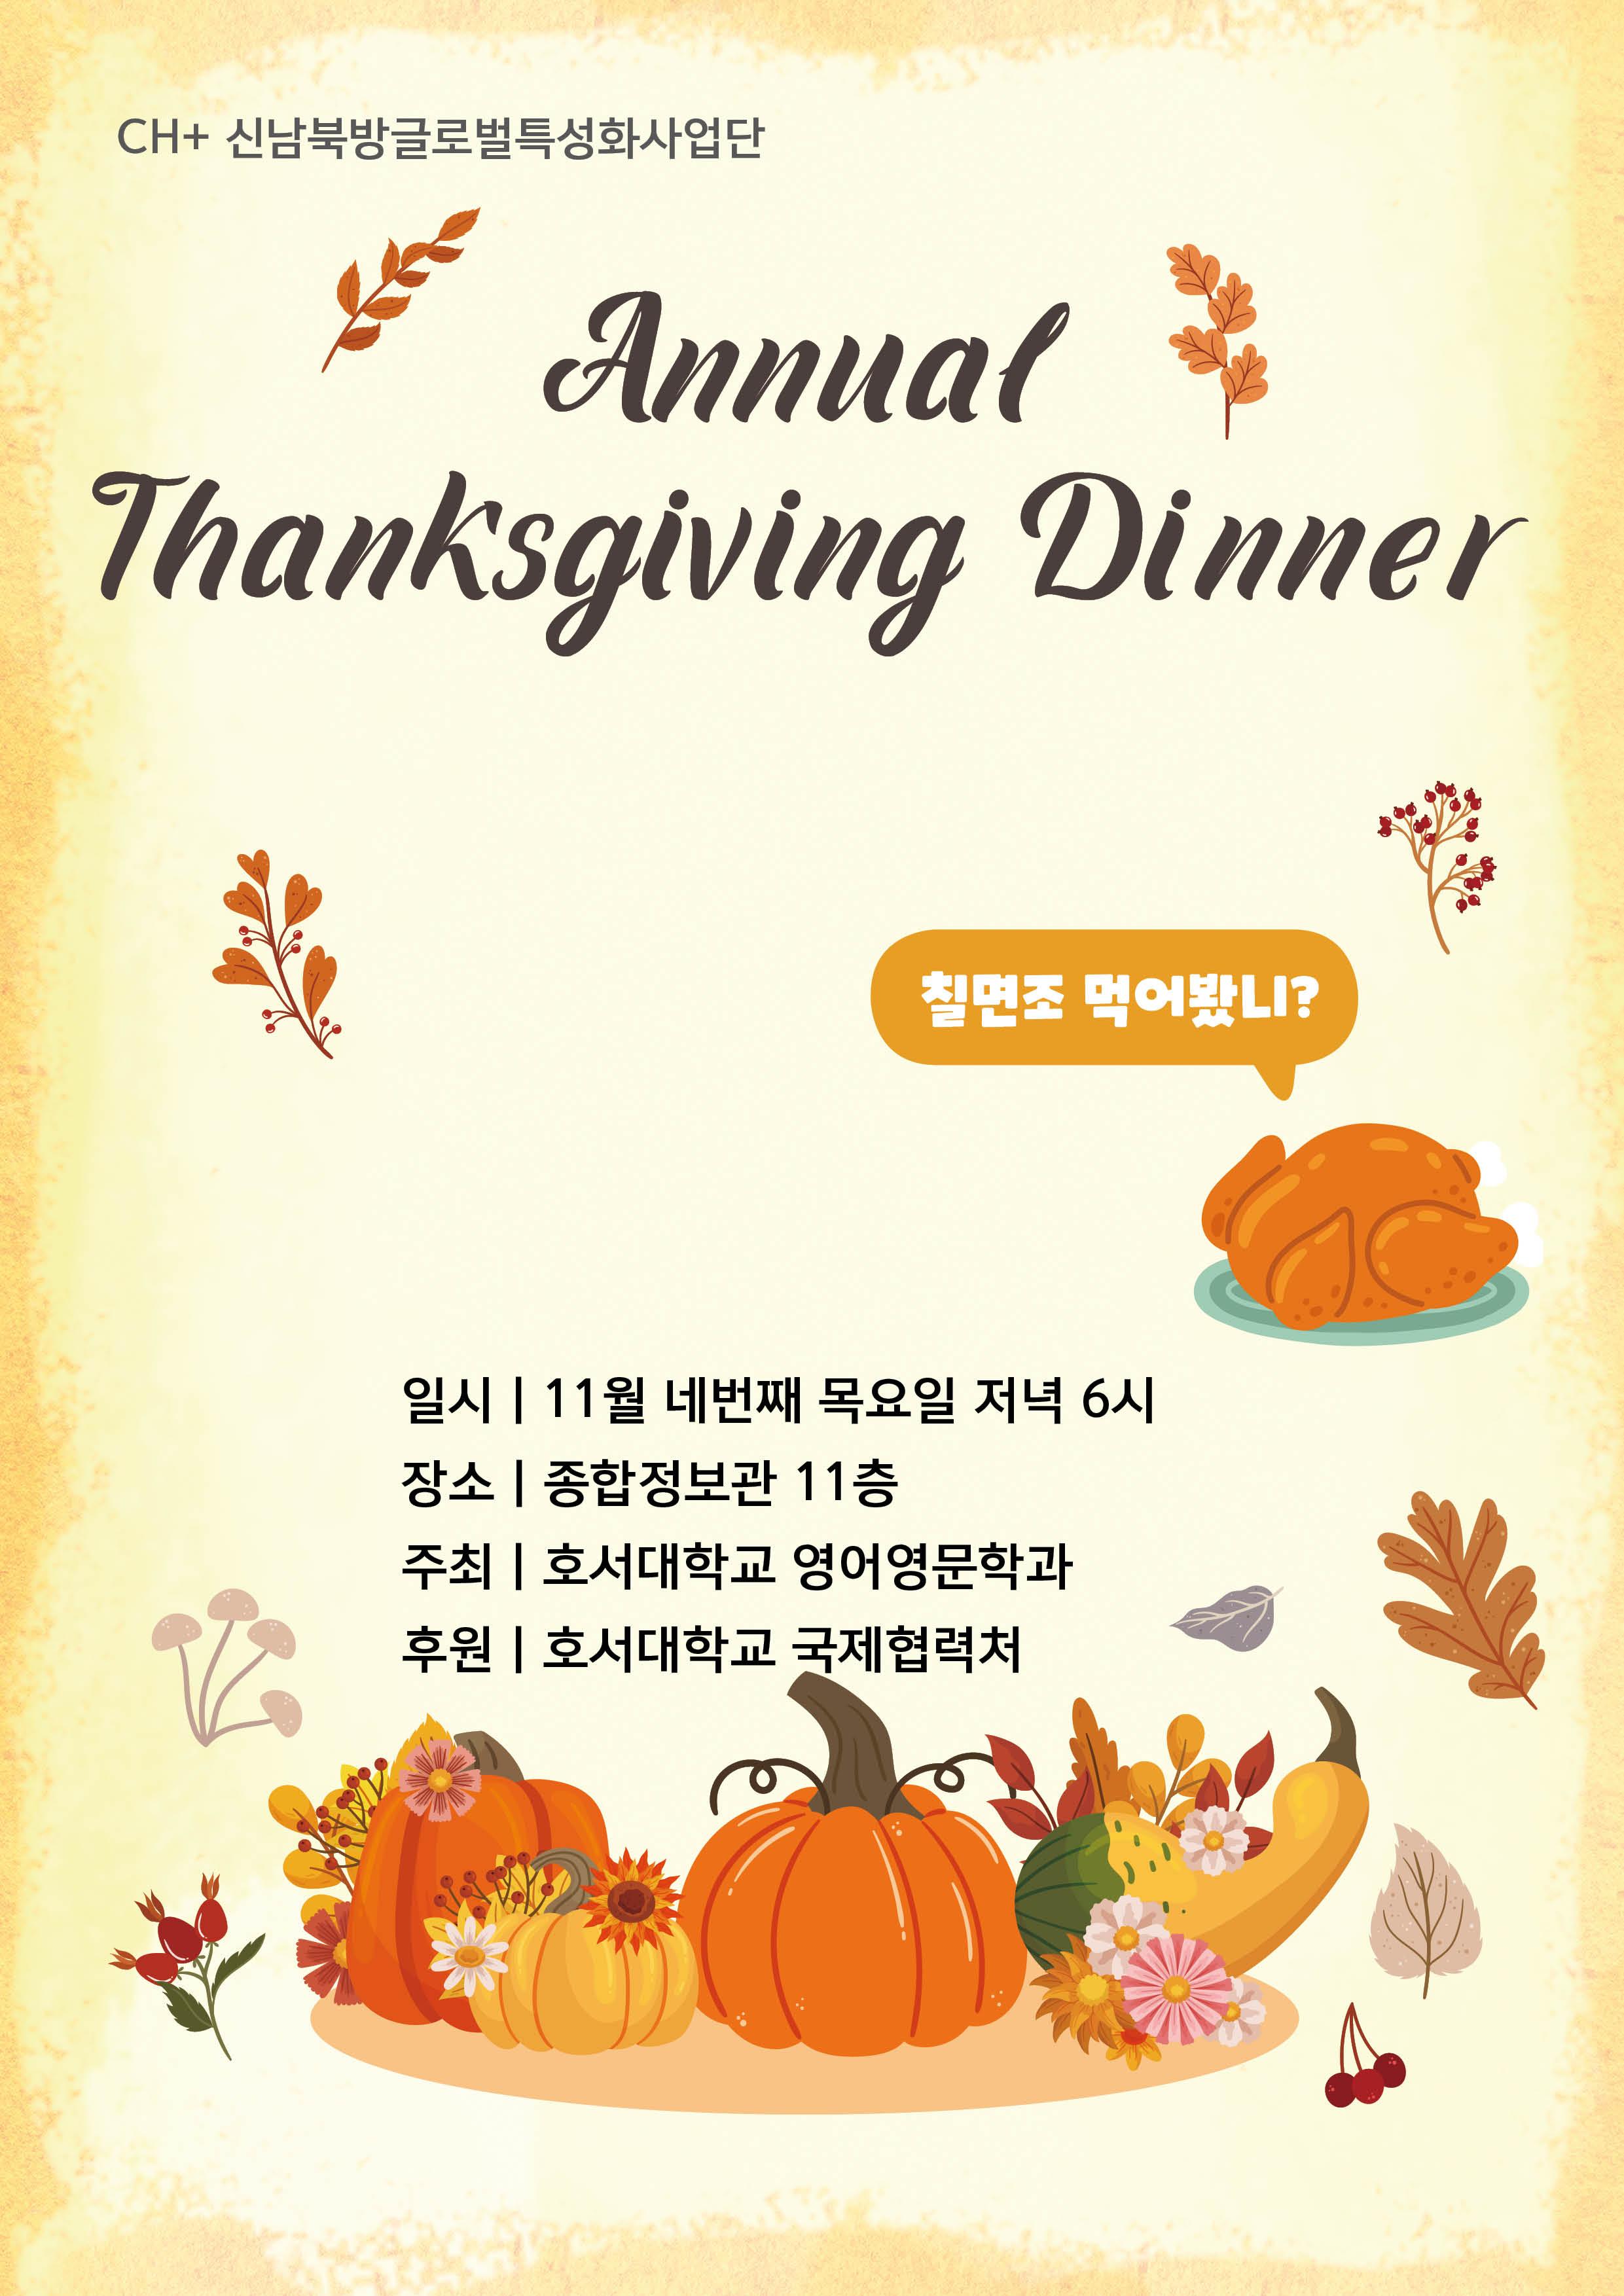 Annual Thanksgiving Dinner~!!